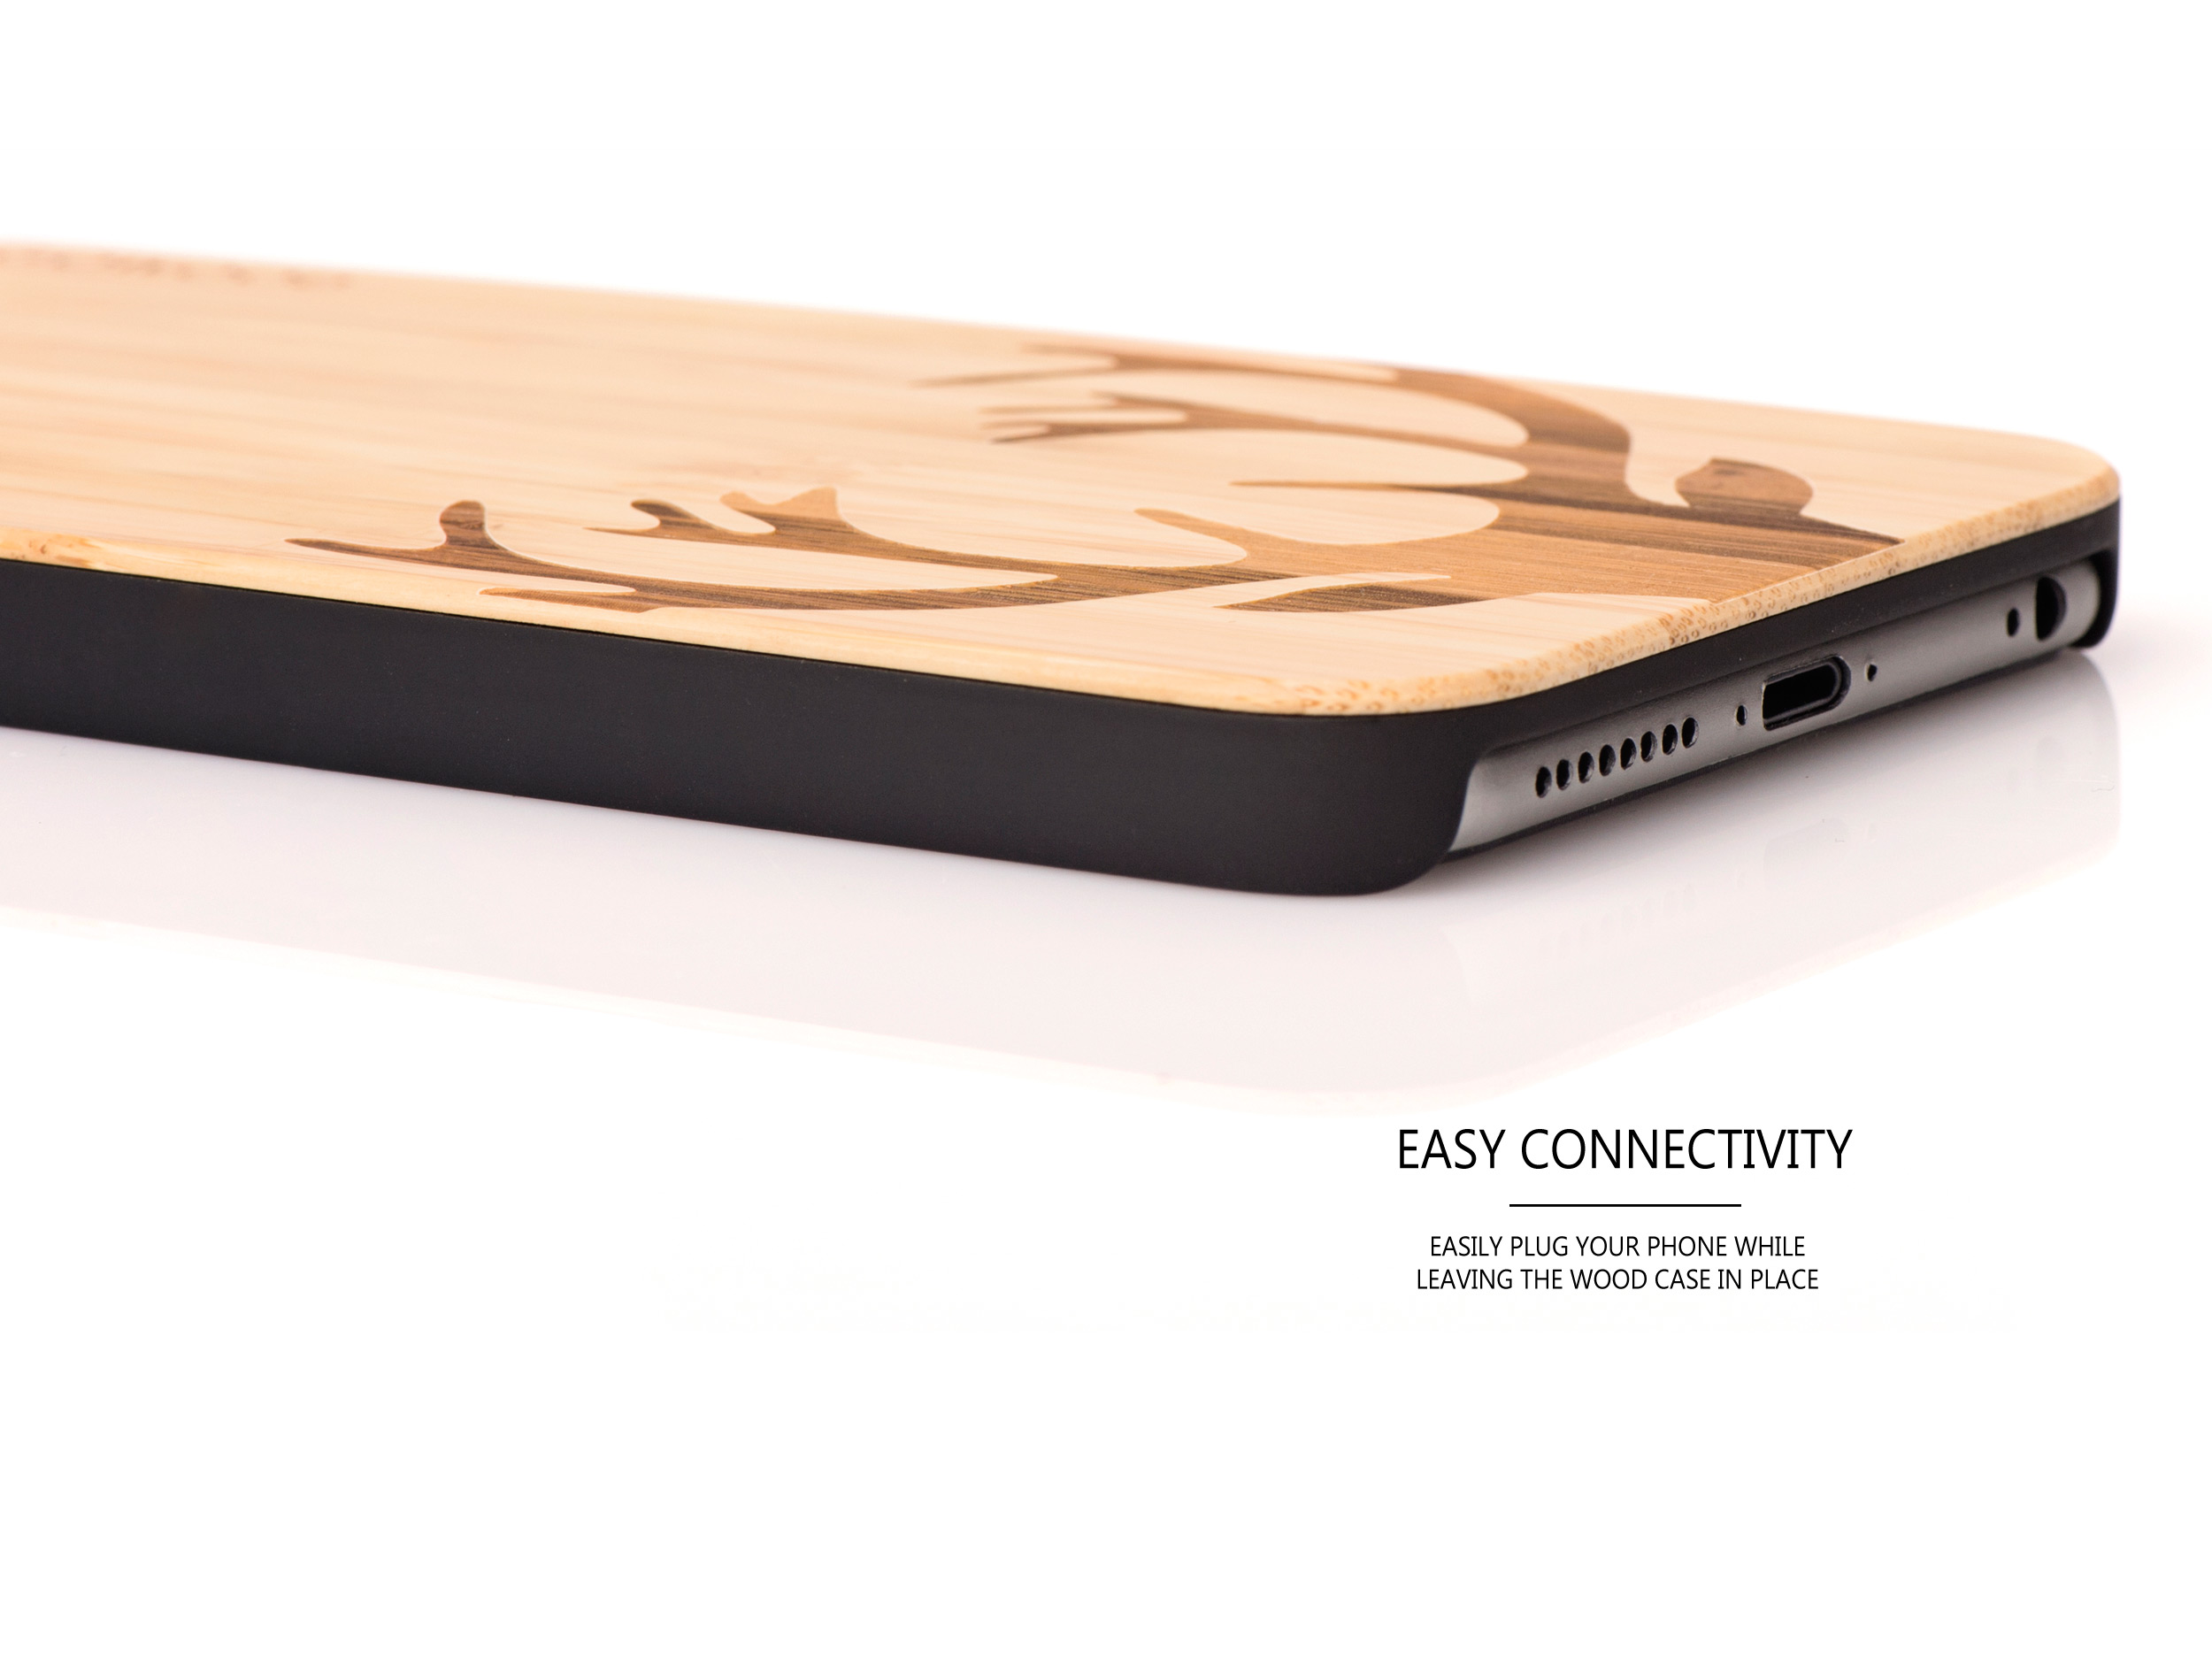 iPhone 6 Plus wood case deer connectivity